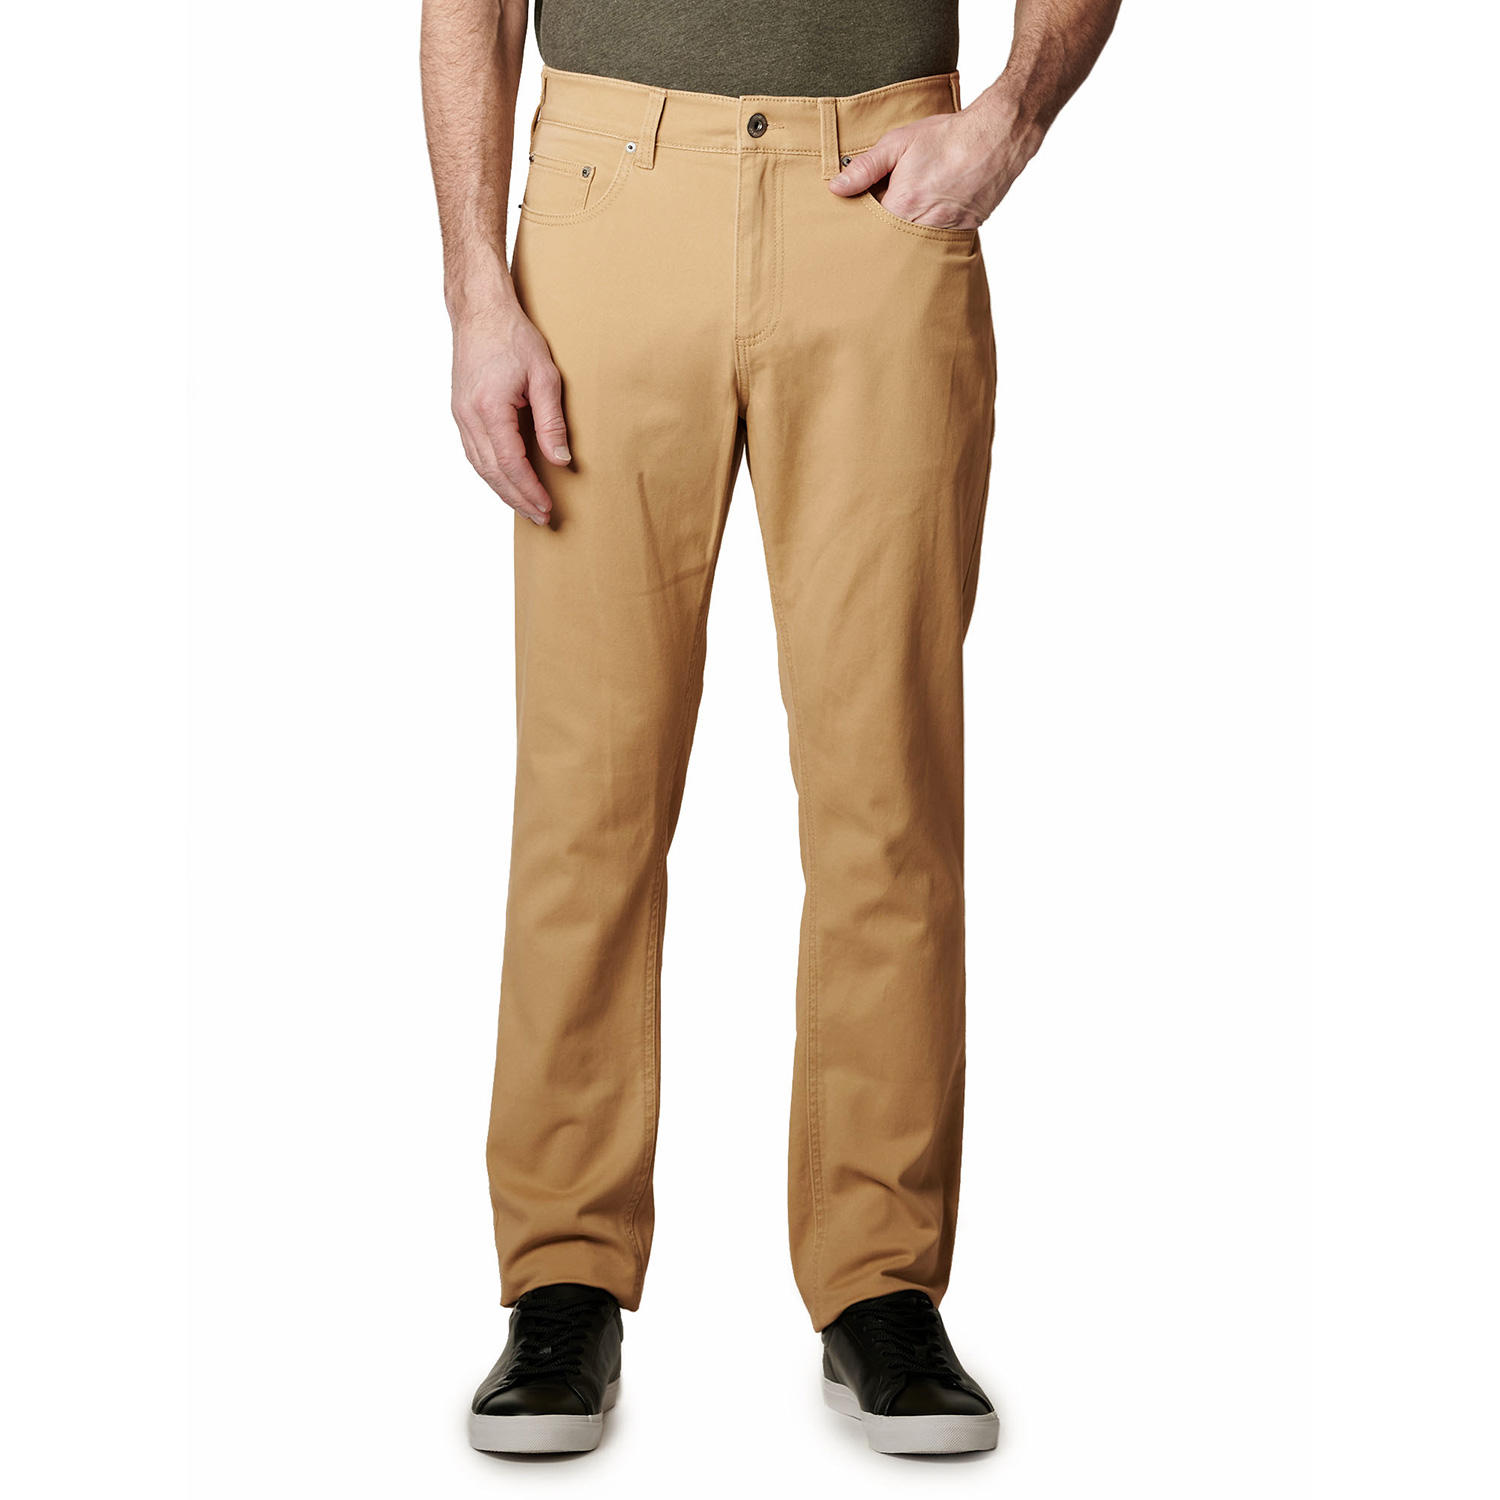 IRON Clothing PATRIOT Comfort Flex Waistband 5 Pocket Stretch Twill Pant - Desert Camel 40x30